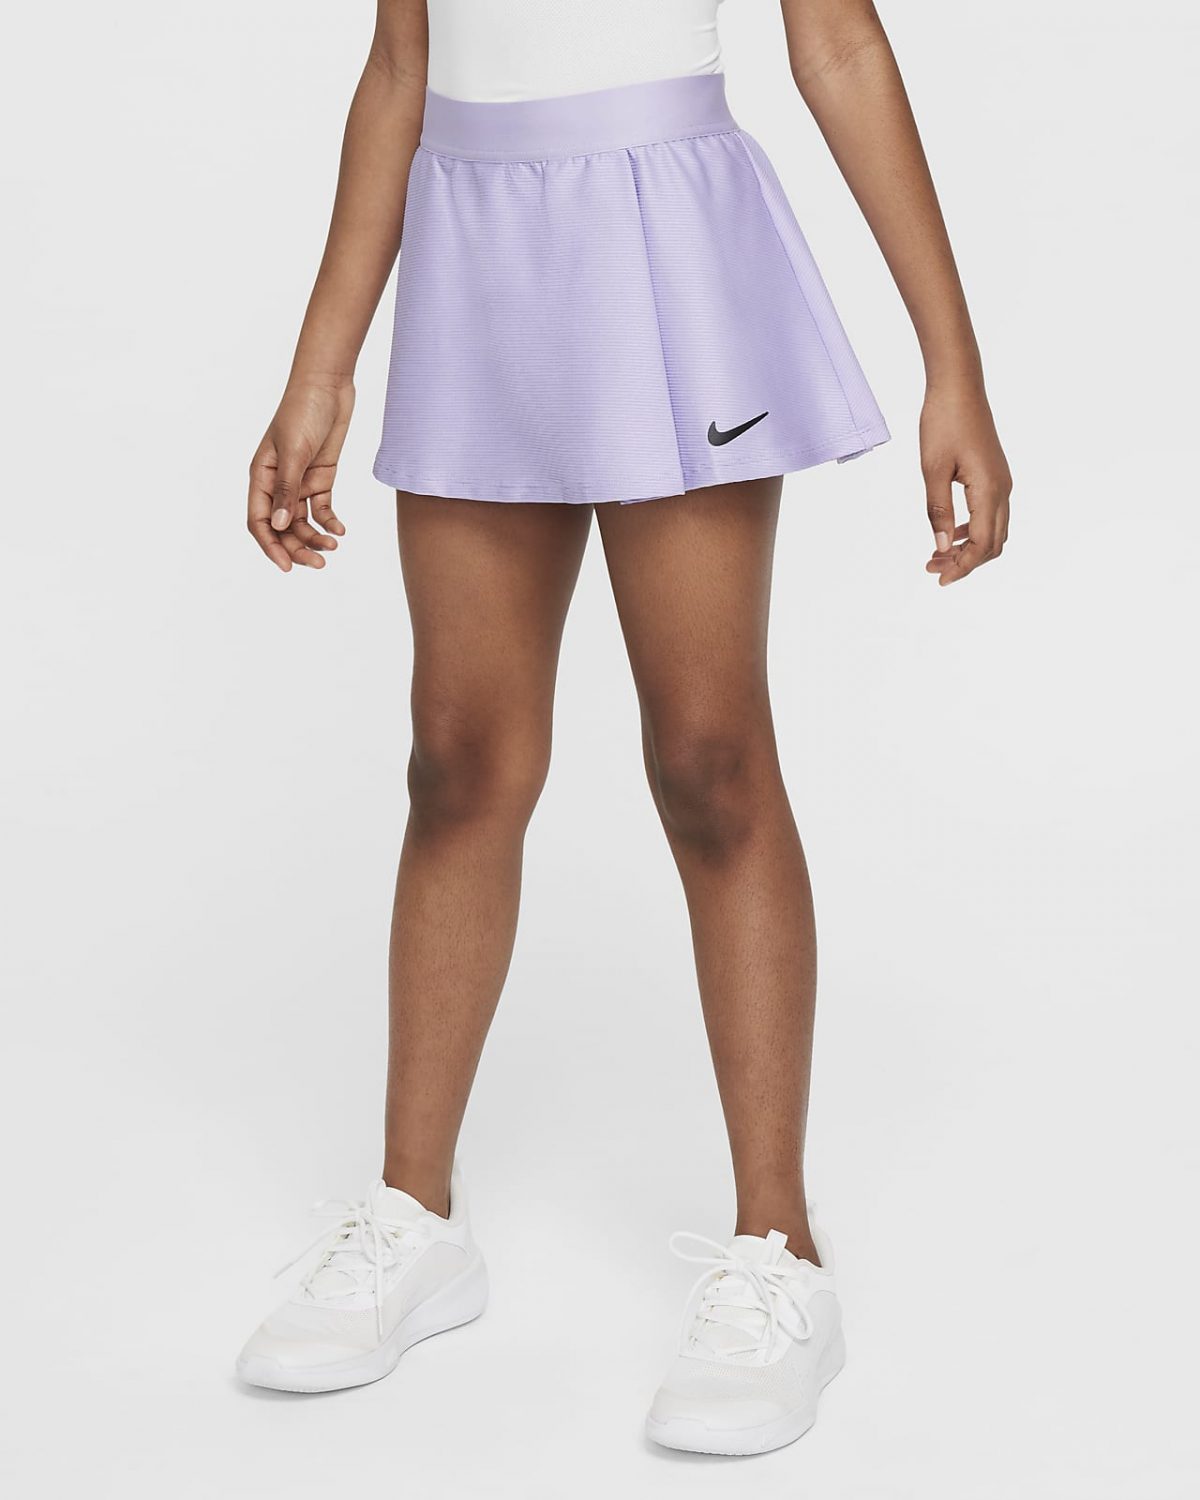 Детская юбка NikeCourt Dri-FIT Victory черная фото